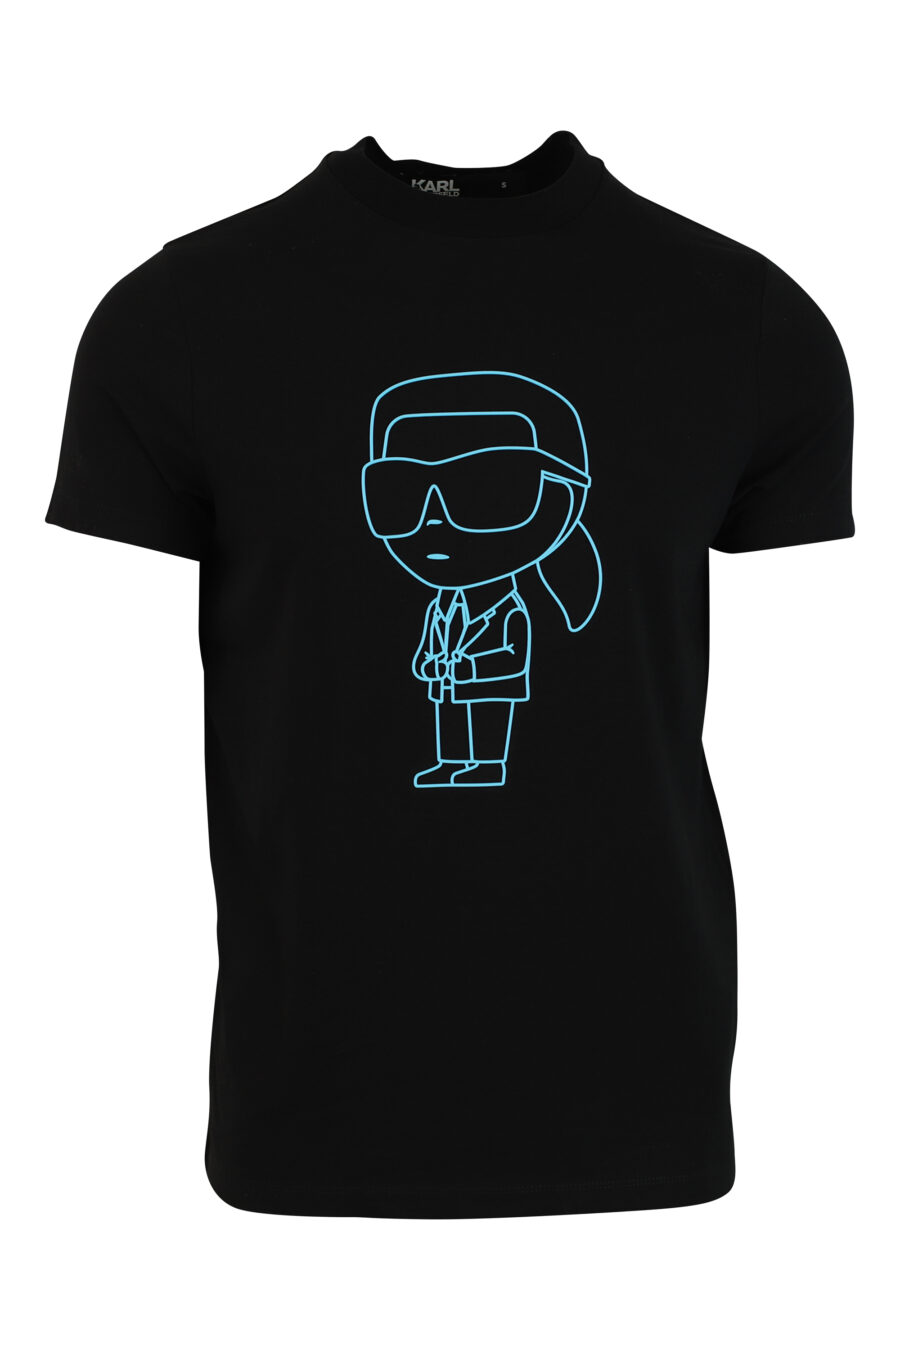 T-shirt noir avec maxilogo en silhouette bleue - 4062226292504